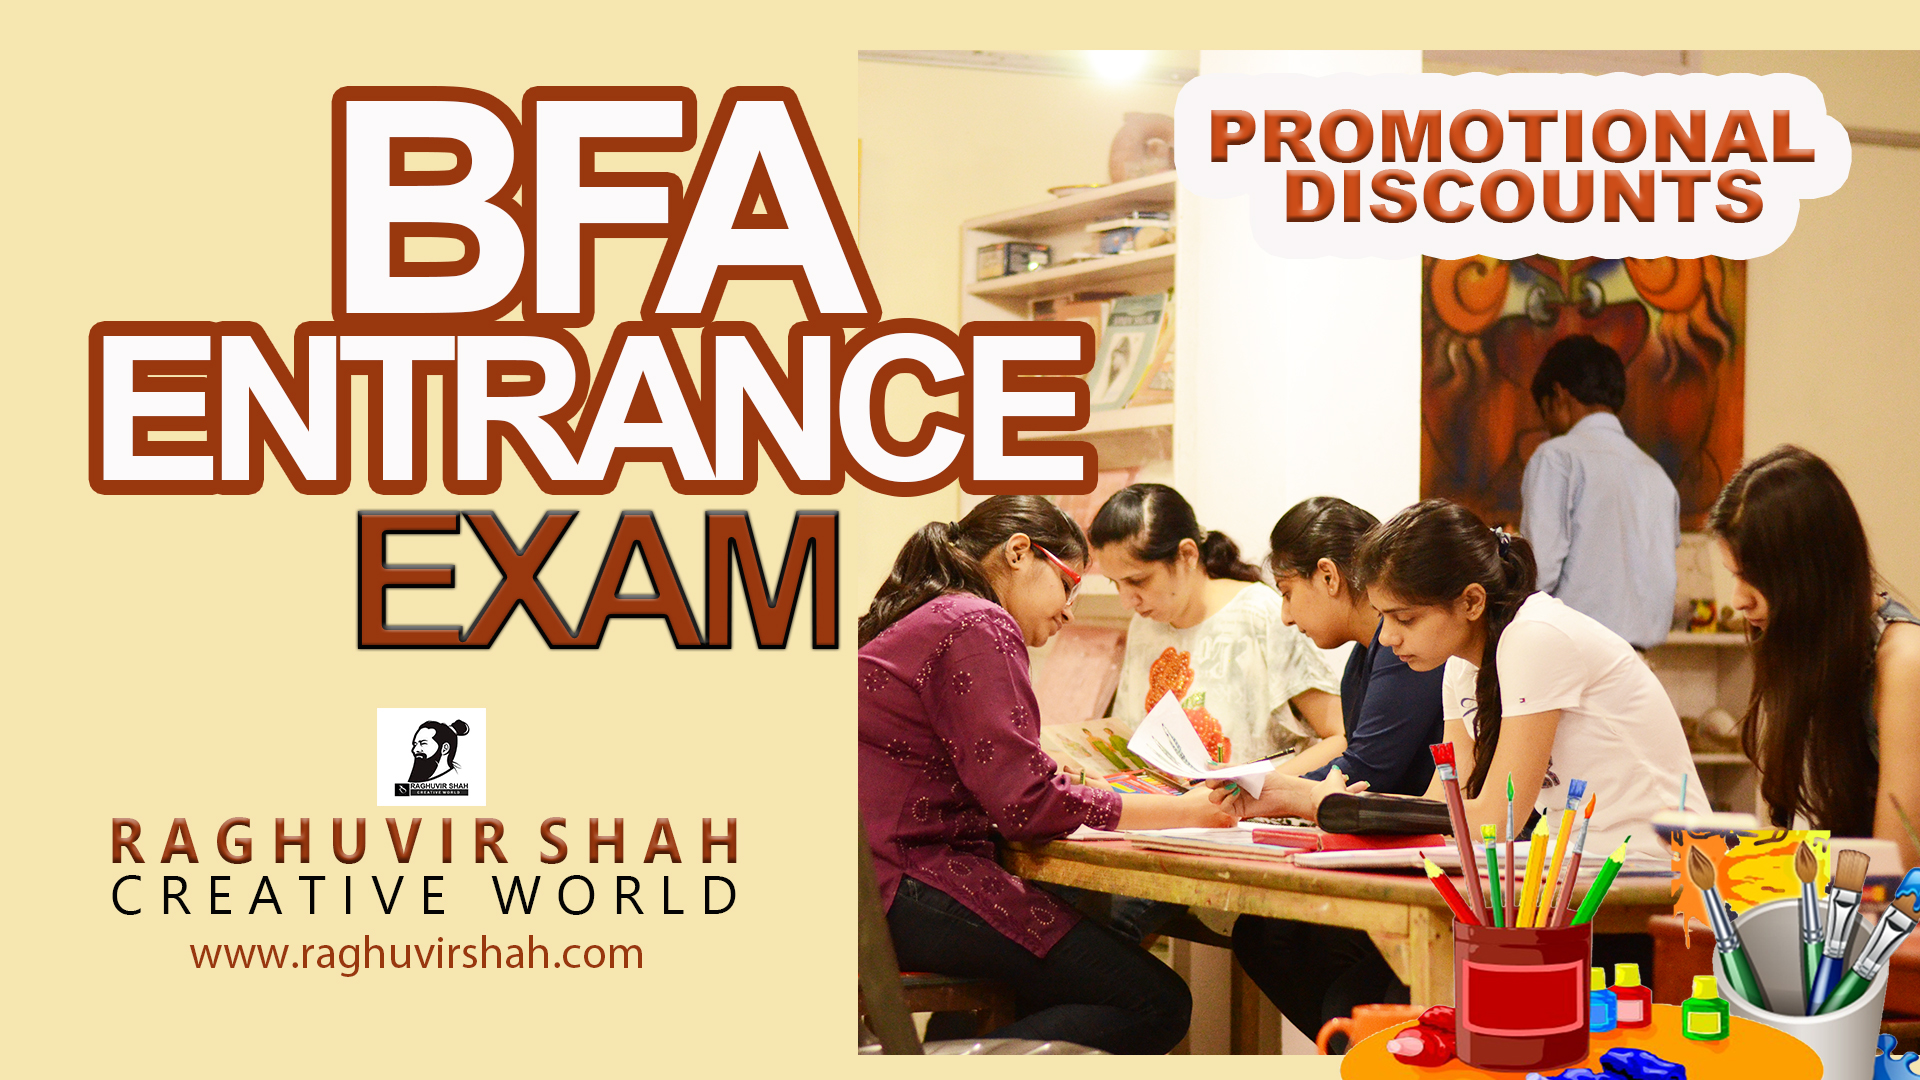 BFA Entrance Exam Coaching at Raghuvir Shah Creative WorldEducation and LearningProfessional CoursesWest DelhiPunjabi Bagh